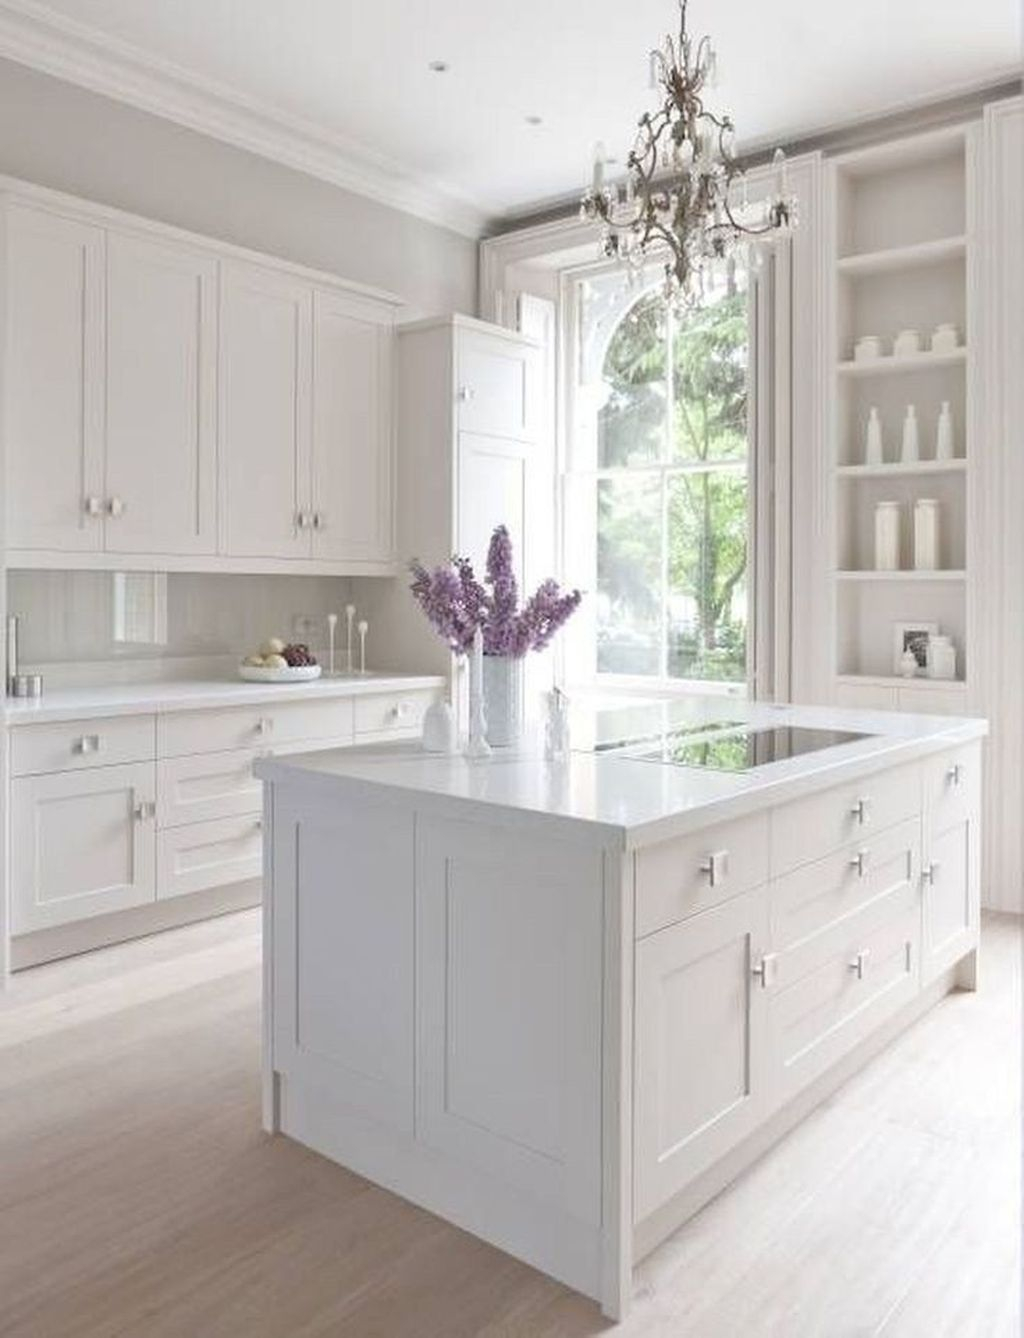 Charming Kitchen Cabinet Decorating Ideas09